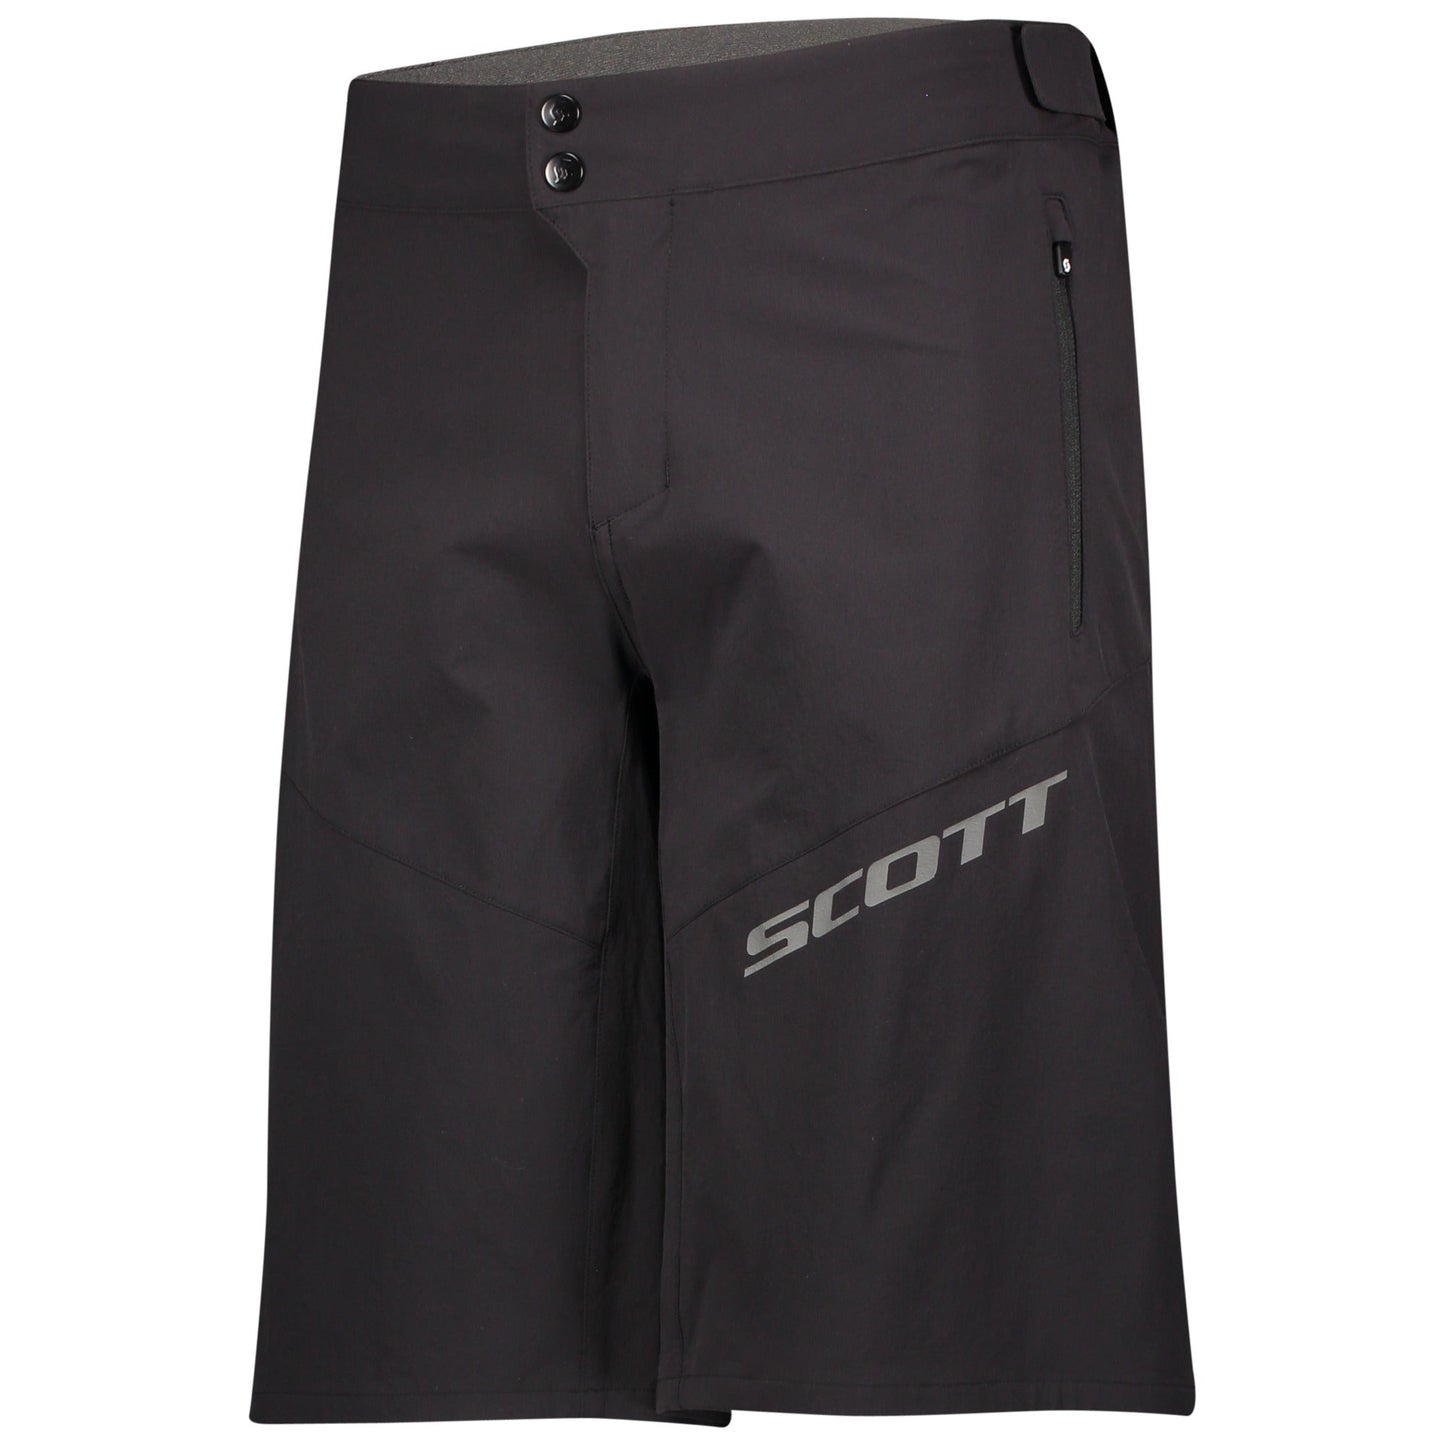 Scott Shorts M's Endurance shorts